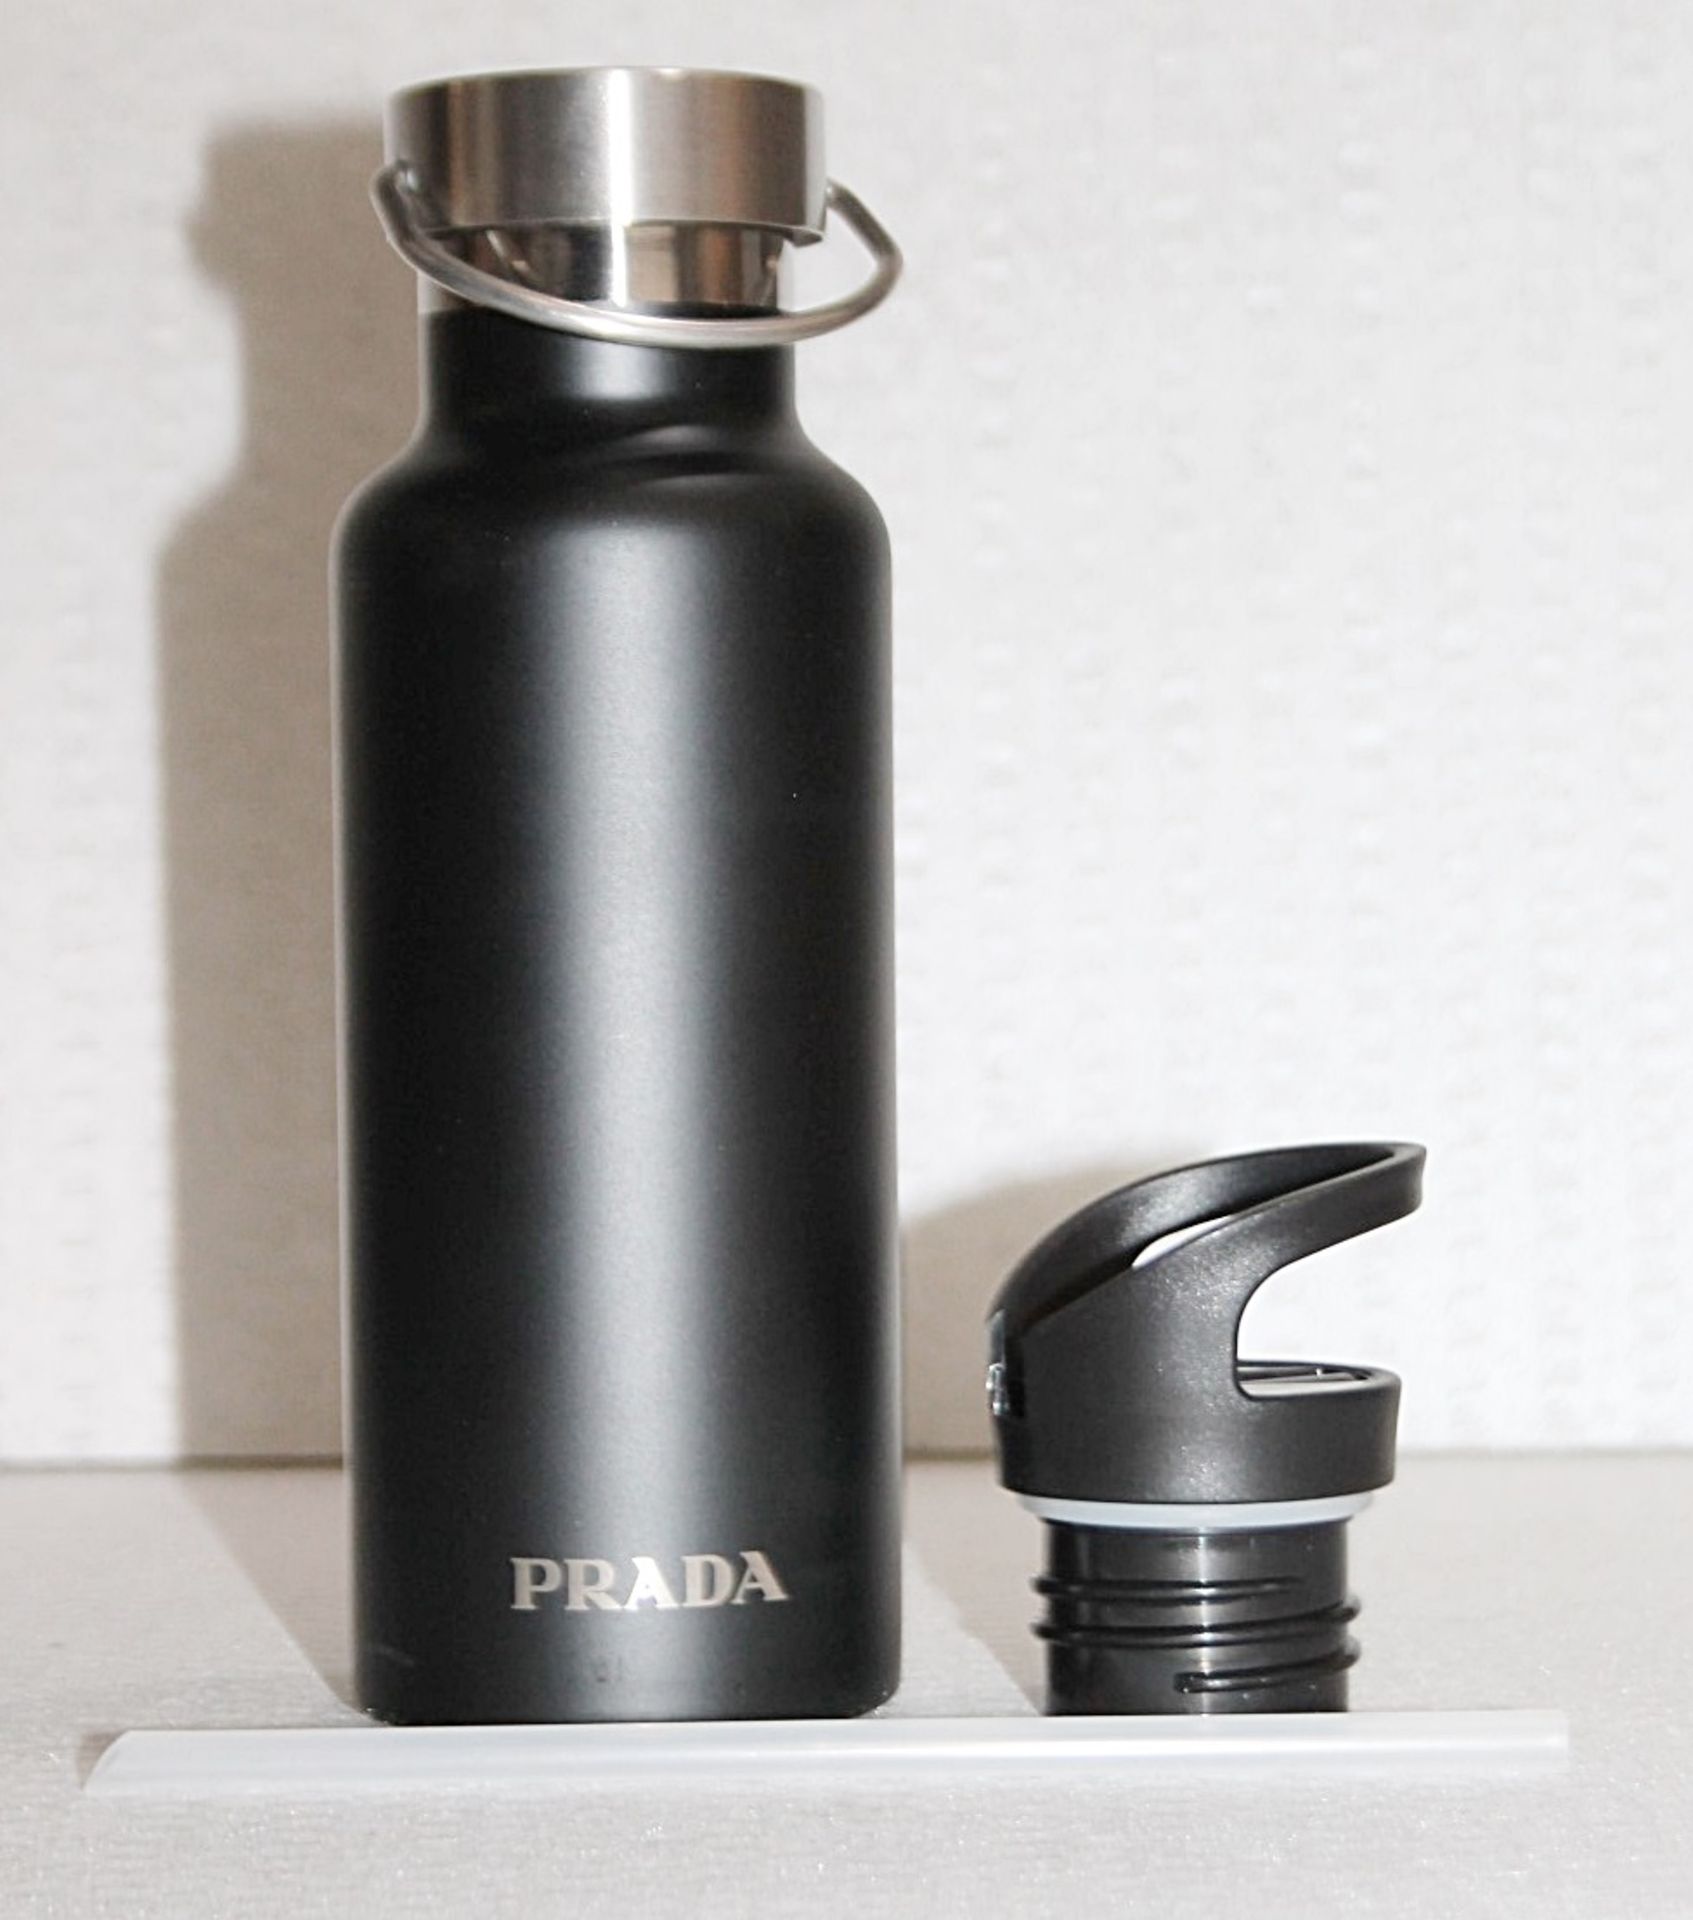 1 x PRADA Stainless Steel Water Bottle In Black, 500 ml - Original Price £100.00